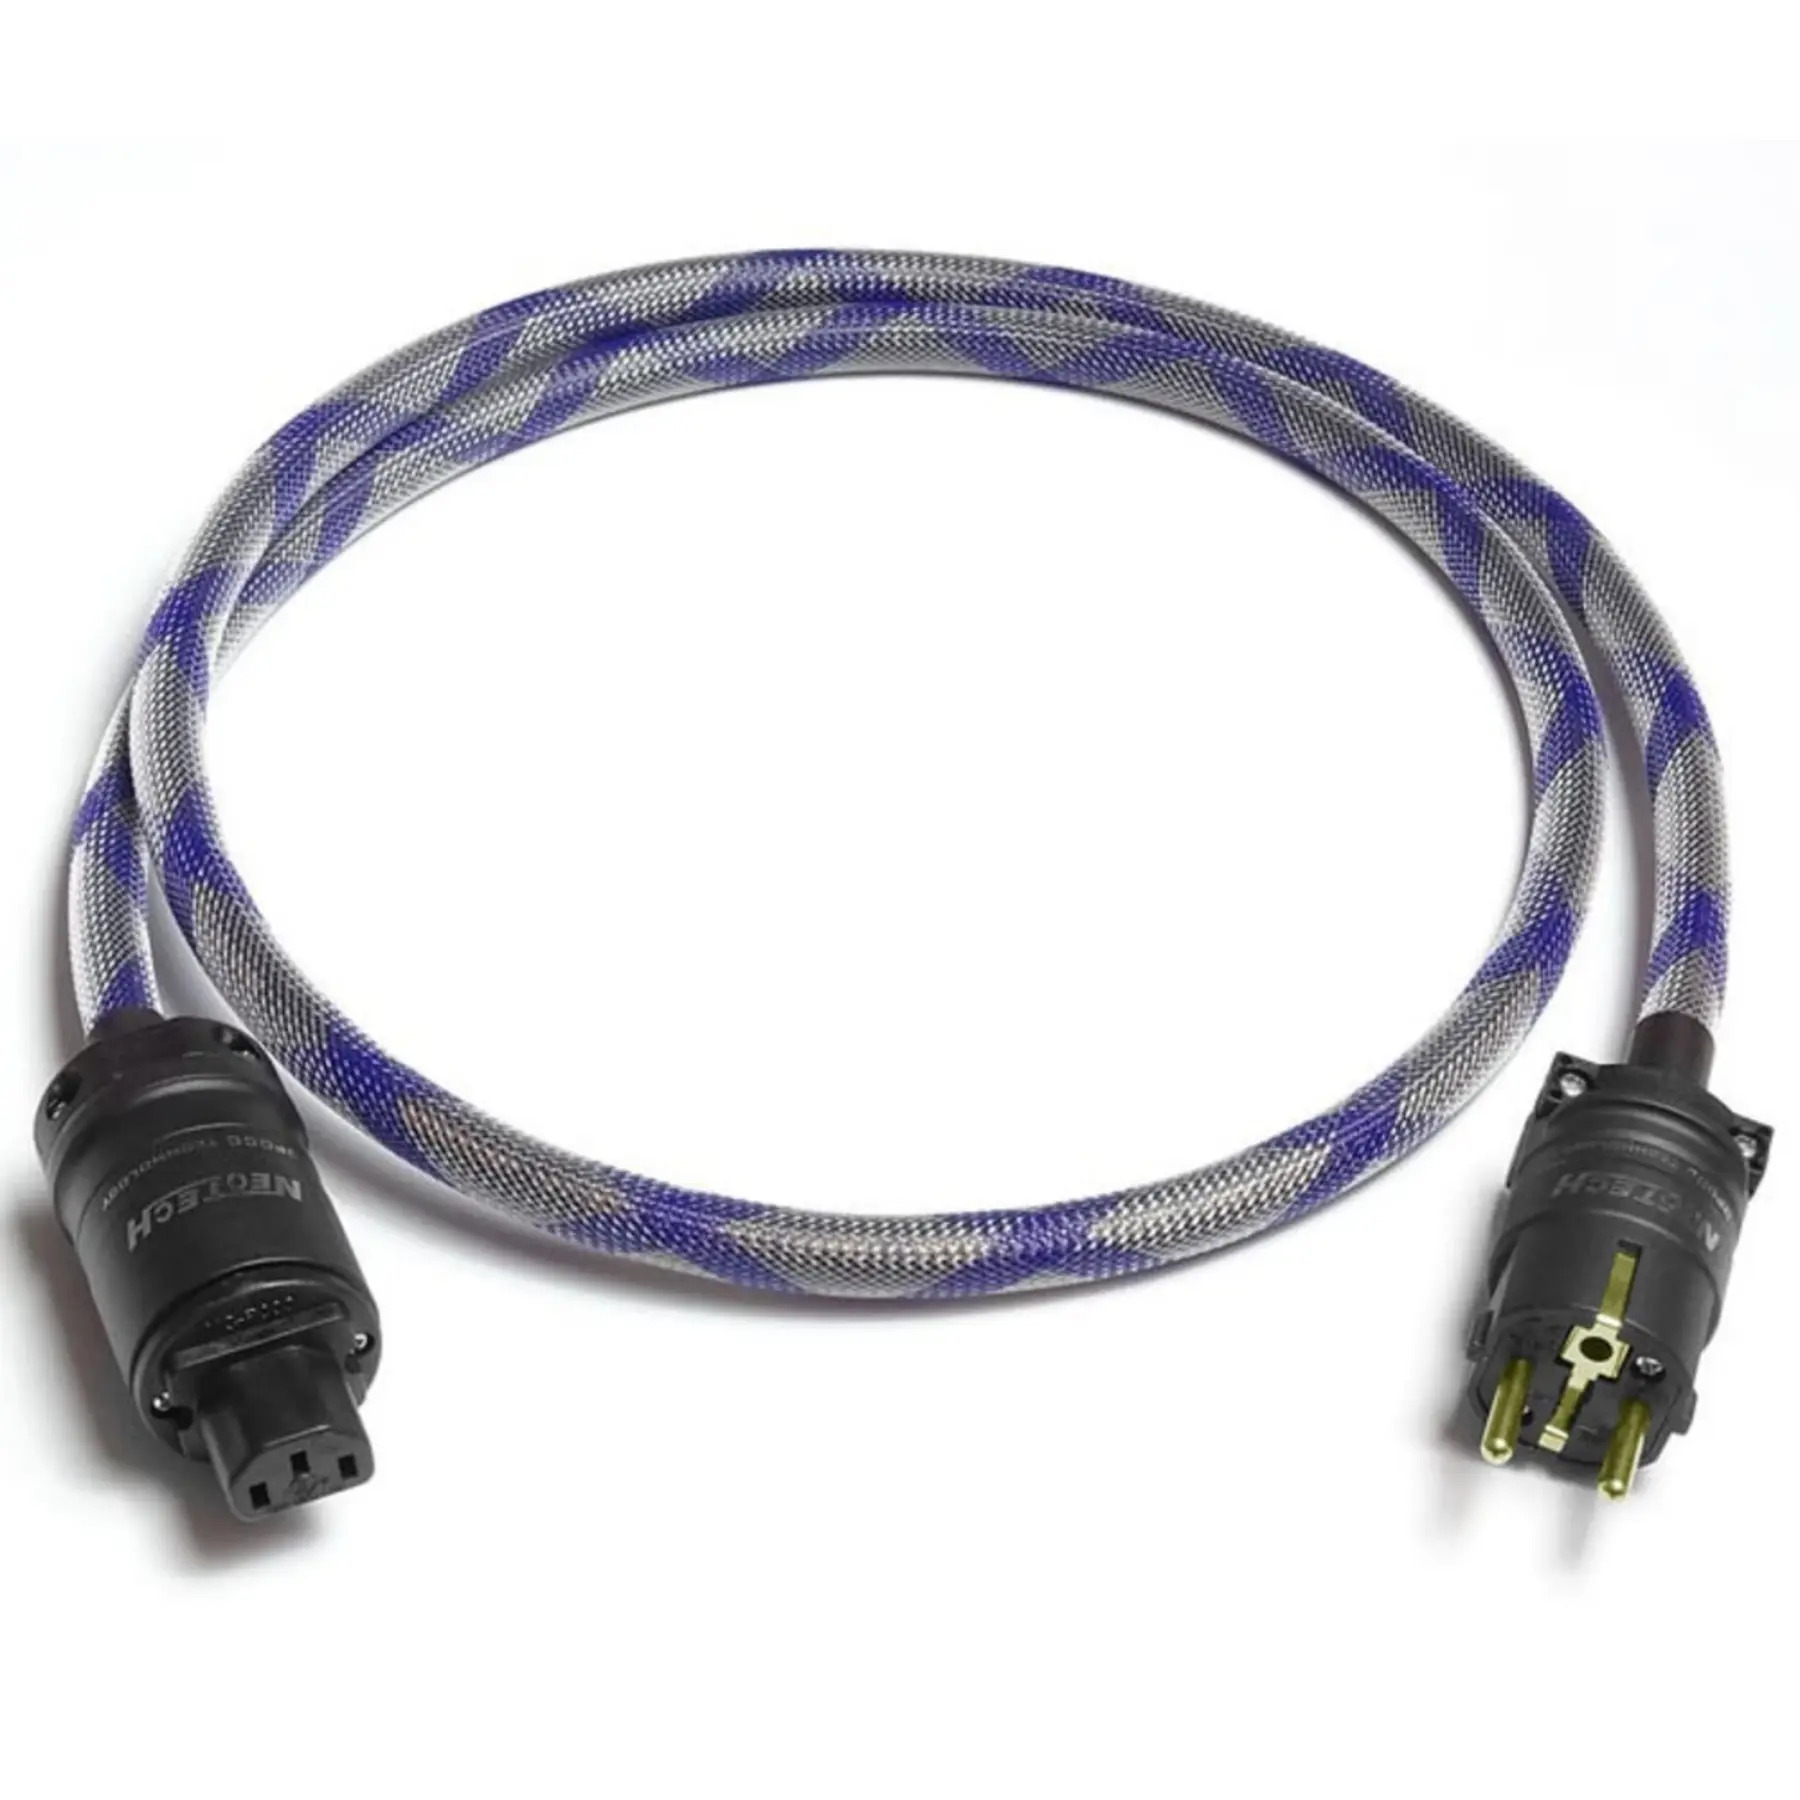 Силовые кабели Neotech NEP-3002III 2,5м силовые кабели neotech nep 3002 iii 1 5m